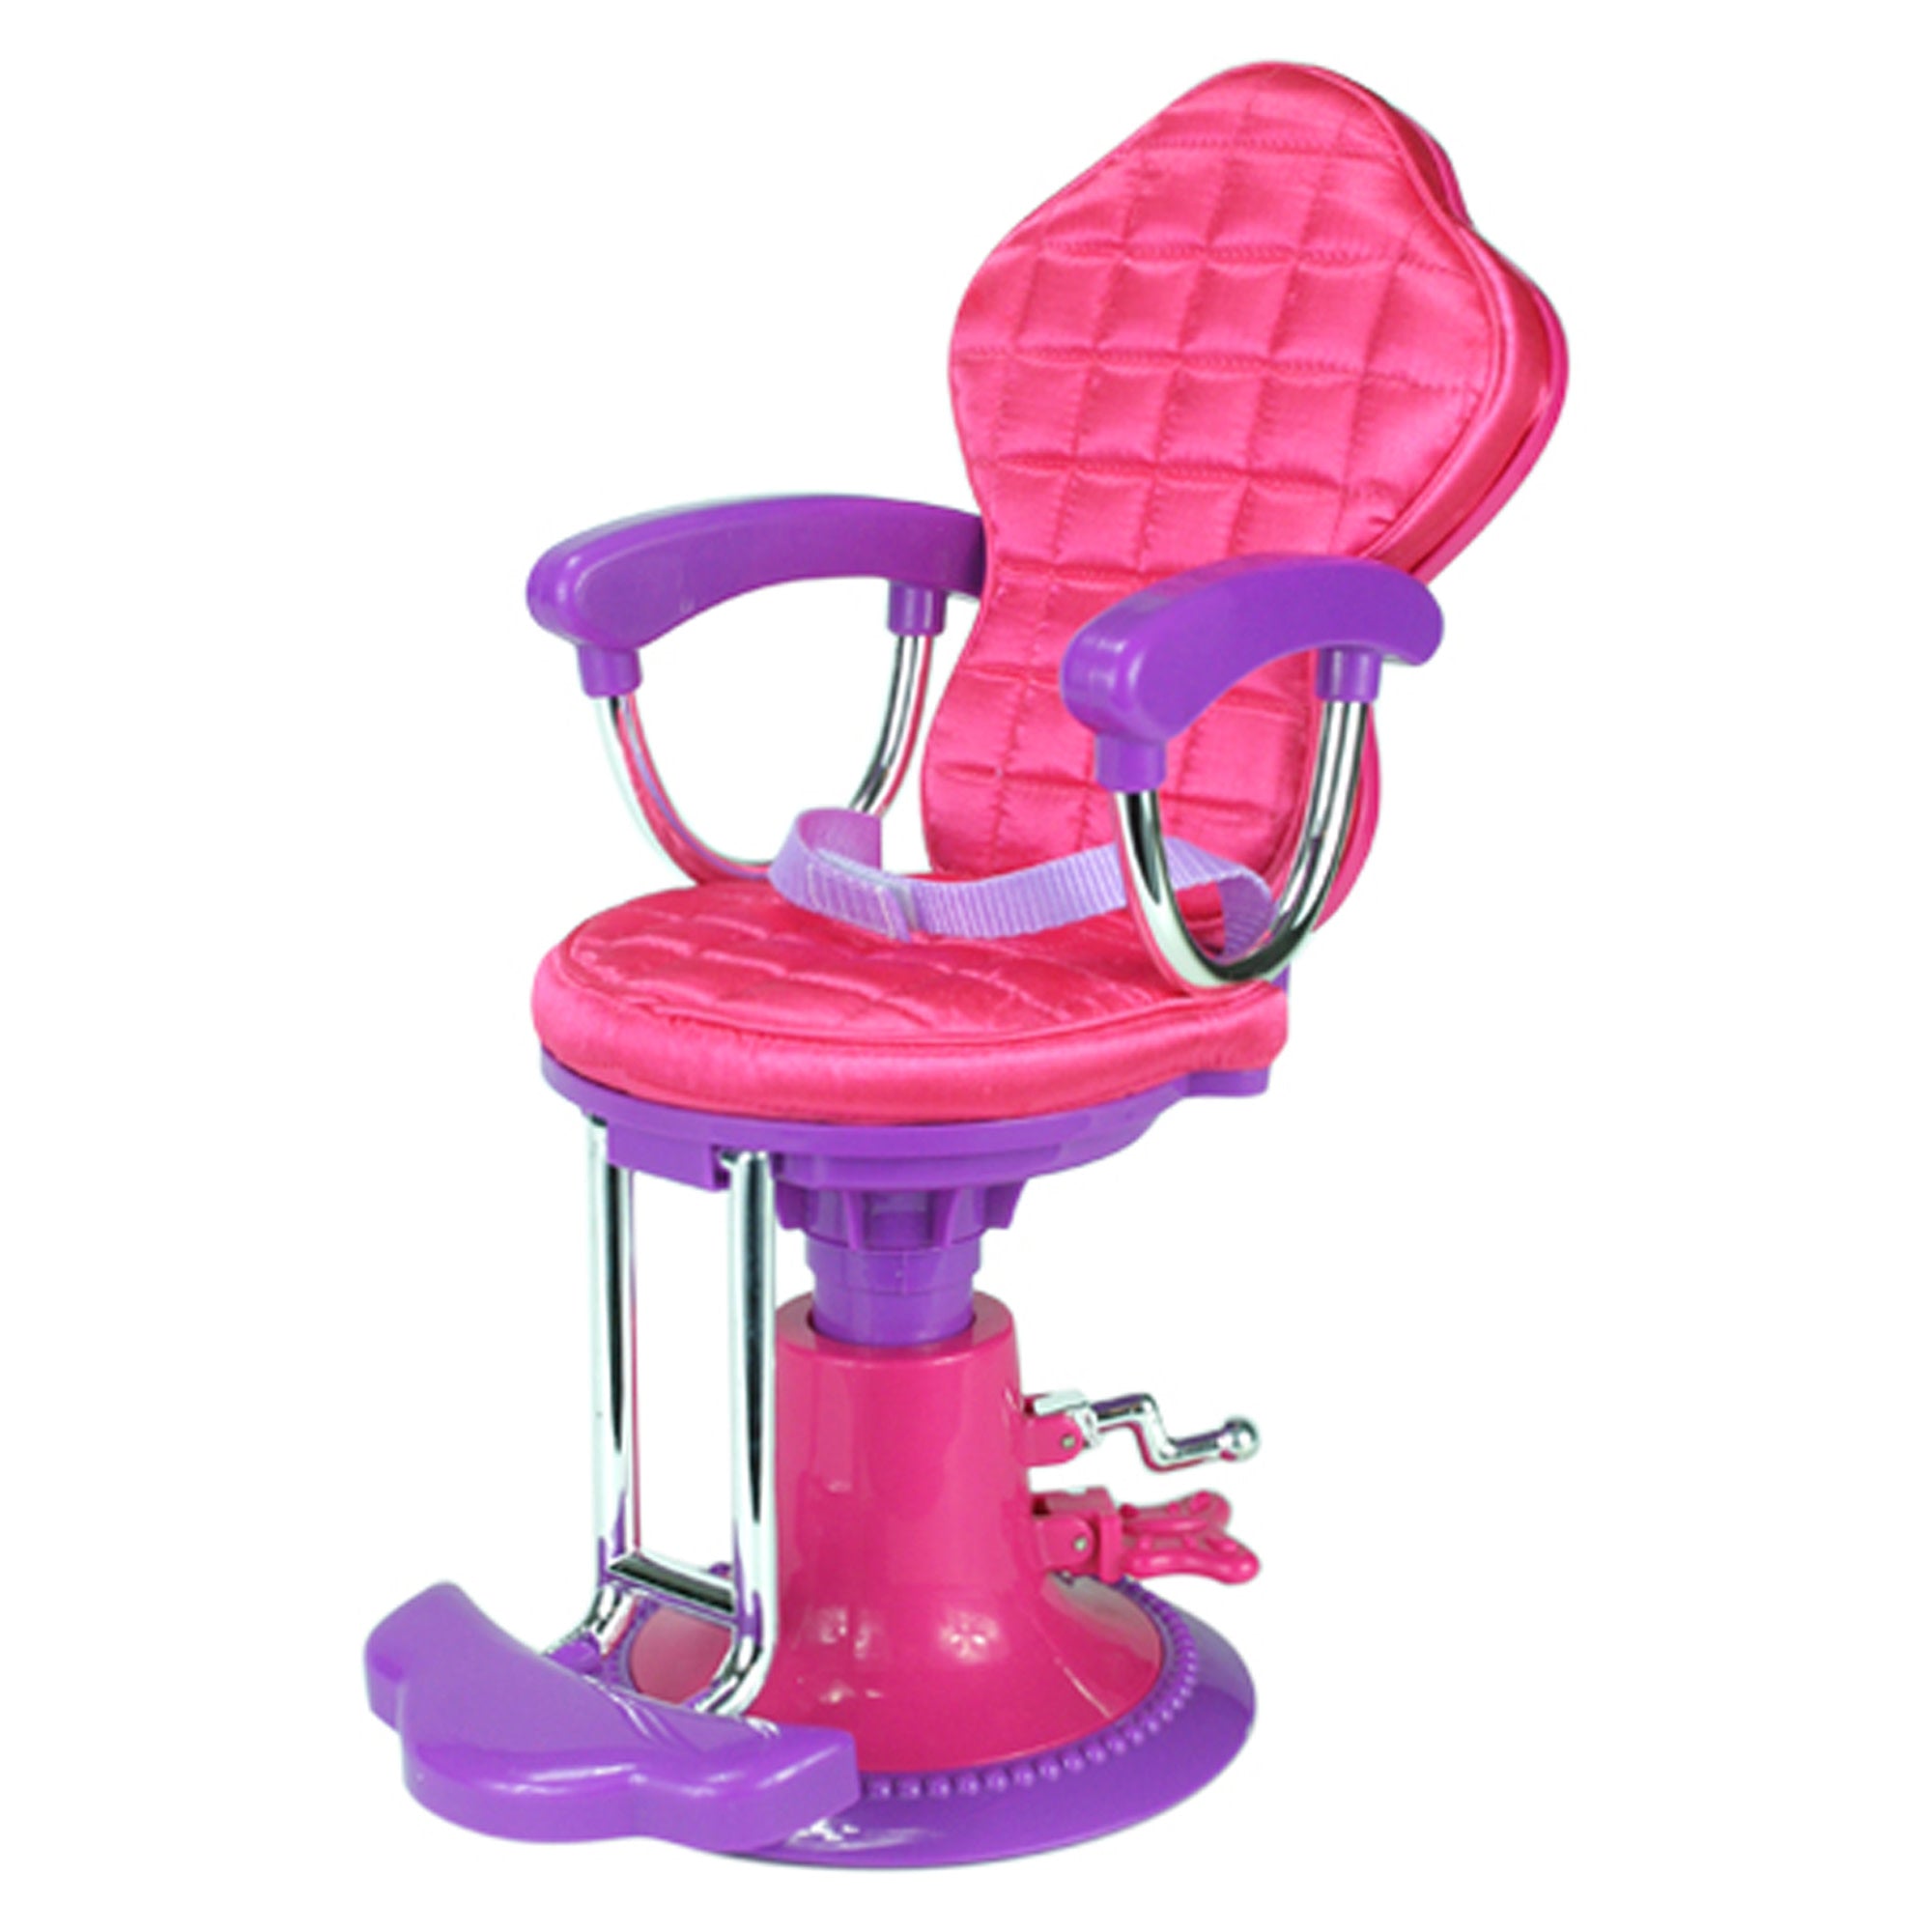 Sophia's - 18" Doll - Small Hair Styling Set + Salon Chair Set - Pink